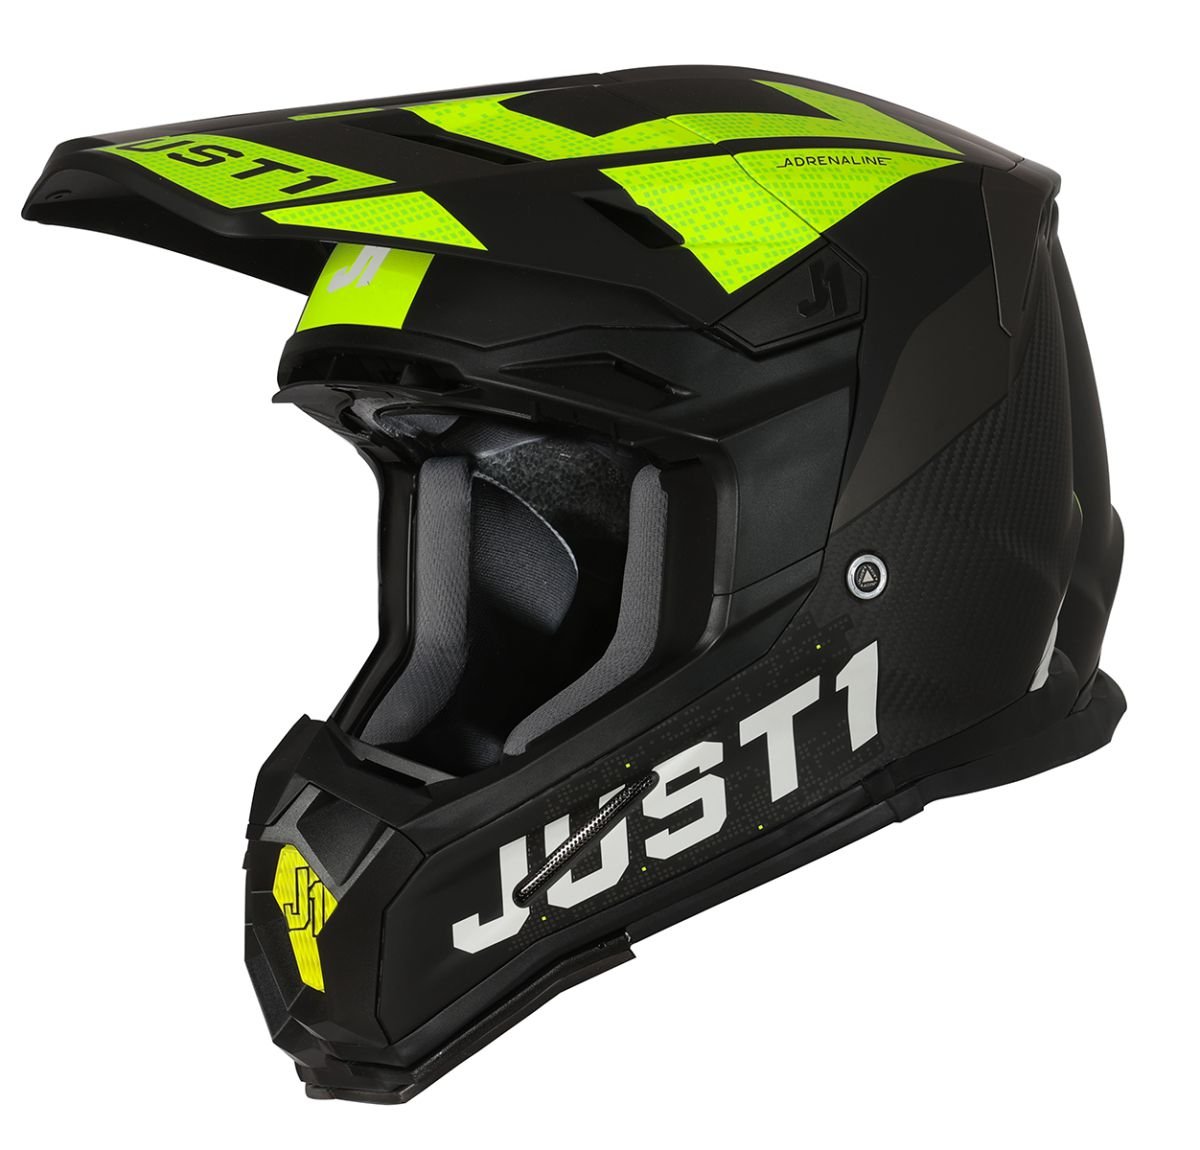 Image of Just1 Helmet J-22 Adrenaline Black Yellow Fluo Carbon Matt Offroad Helmet Talla XL